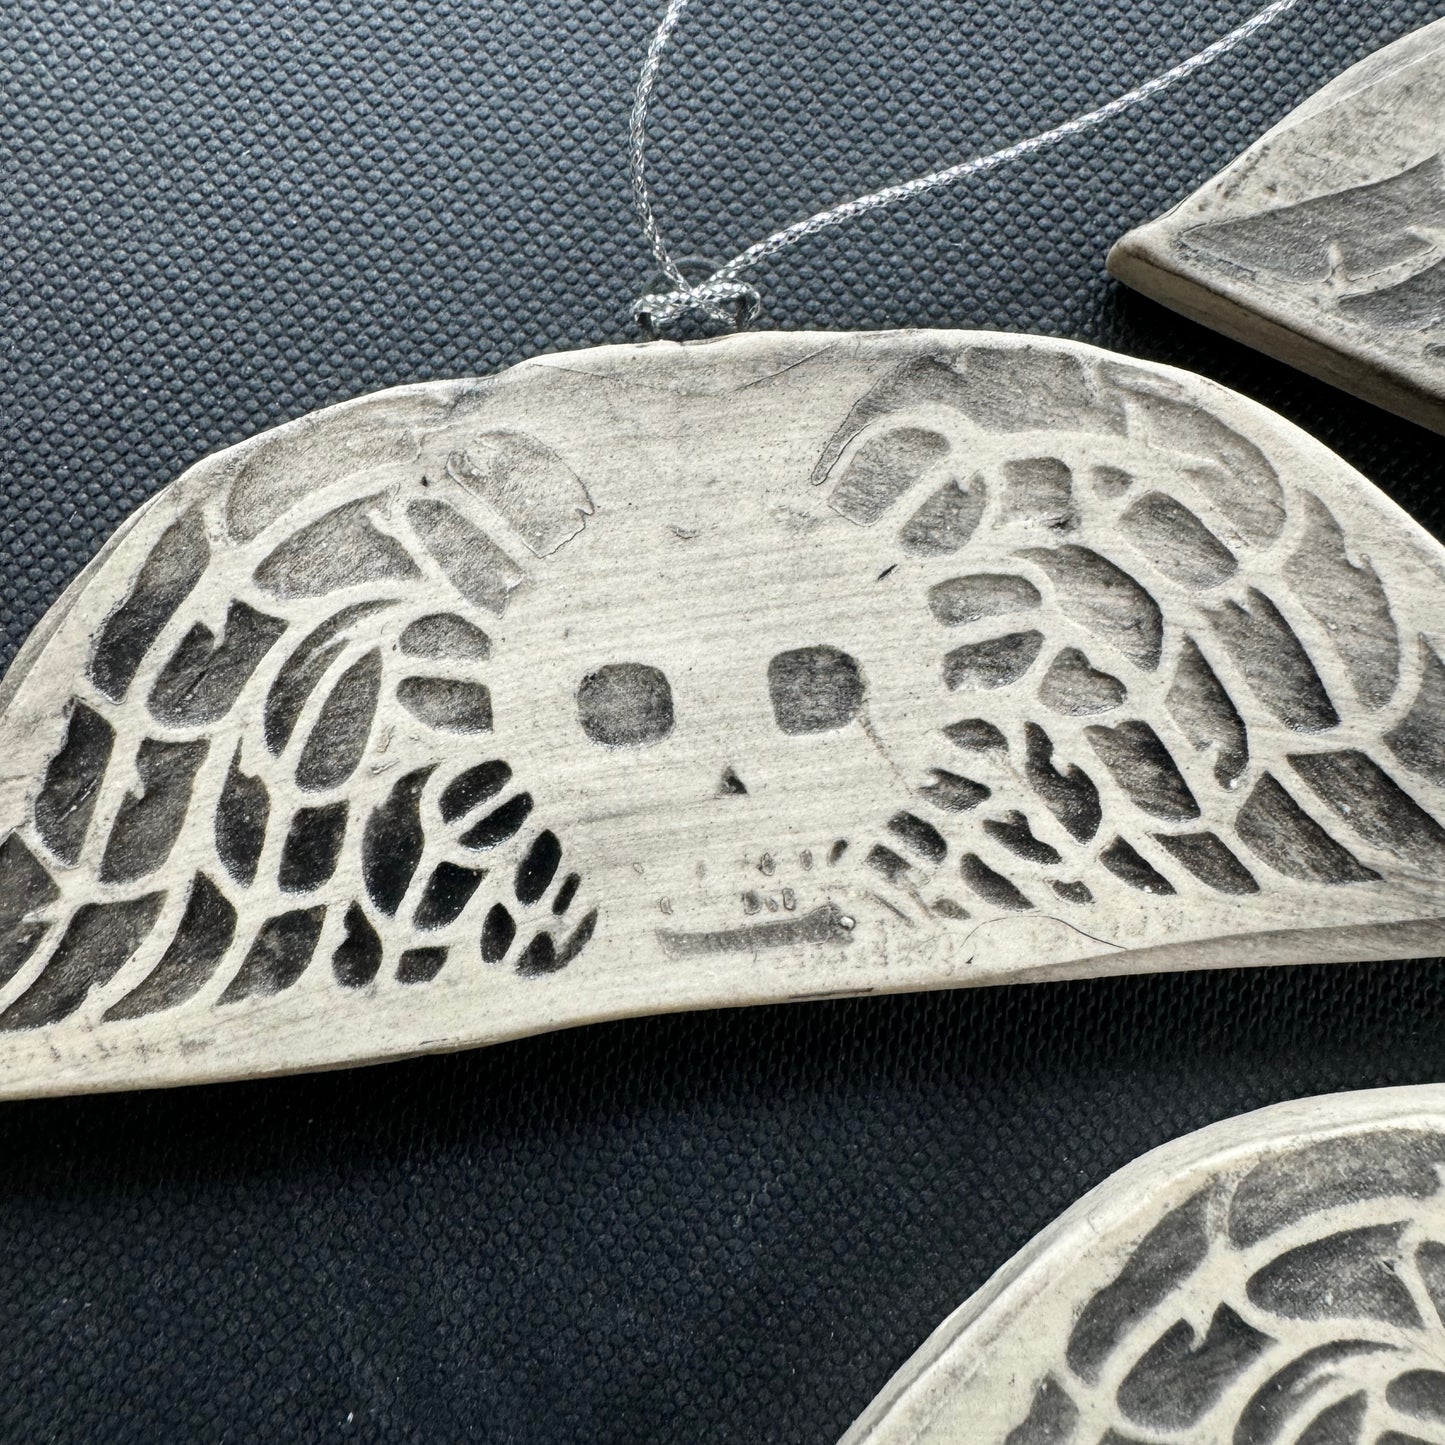 Handmade ceramic winged death's head ornament